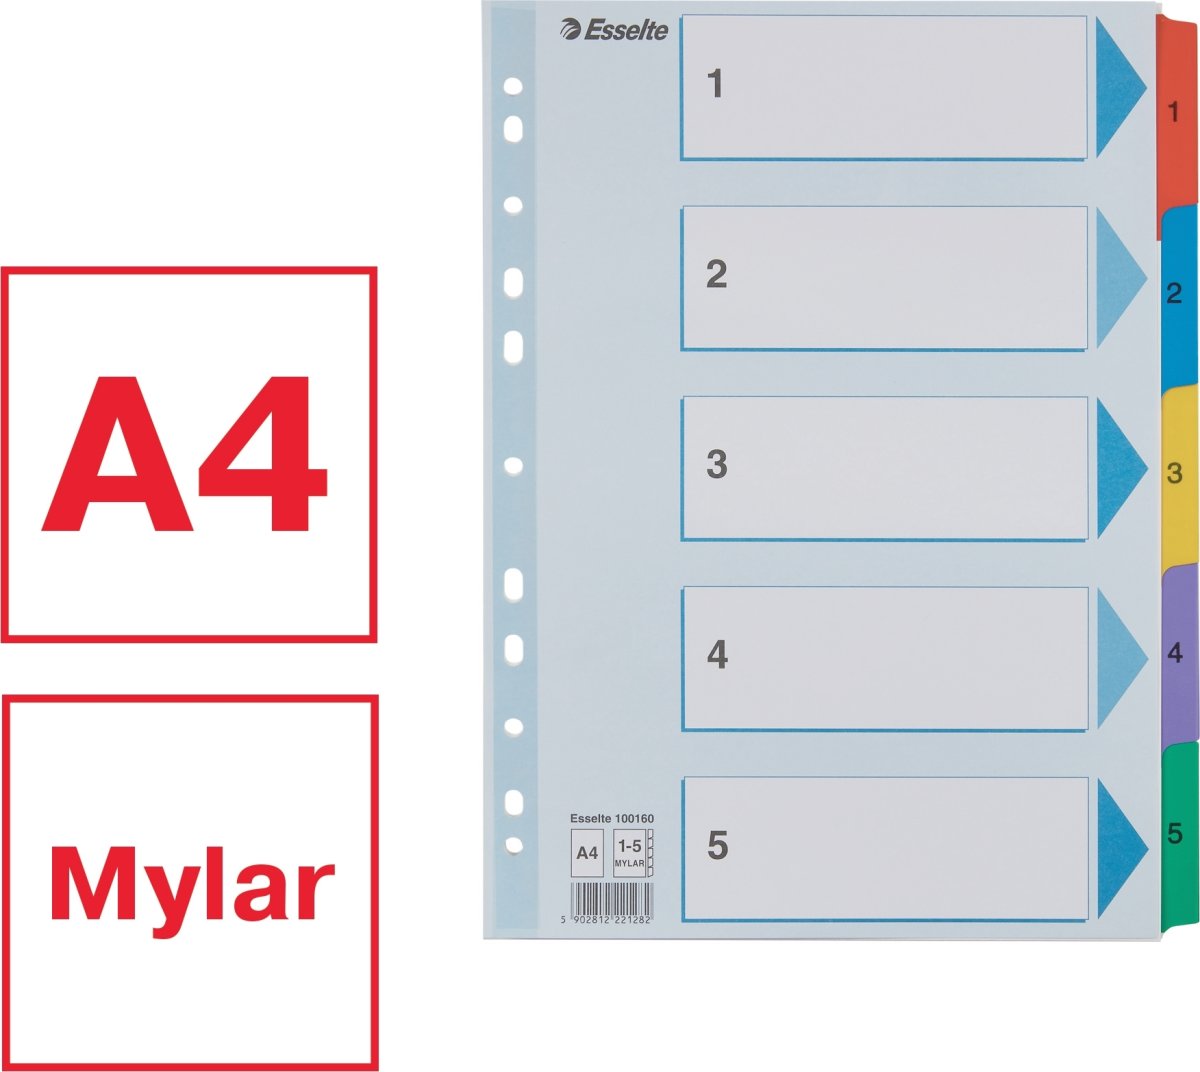 Register Esselte Mylar A4 1-5